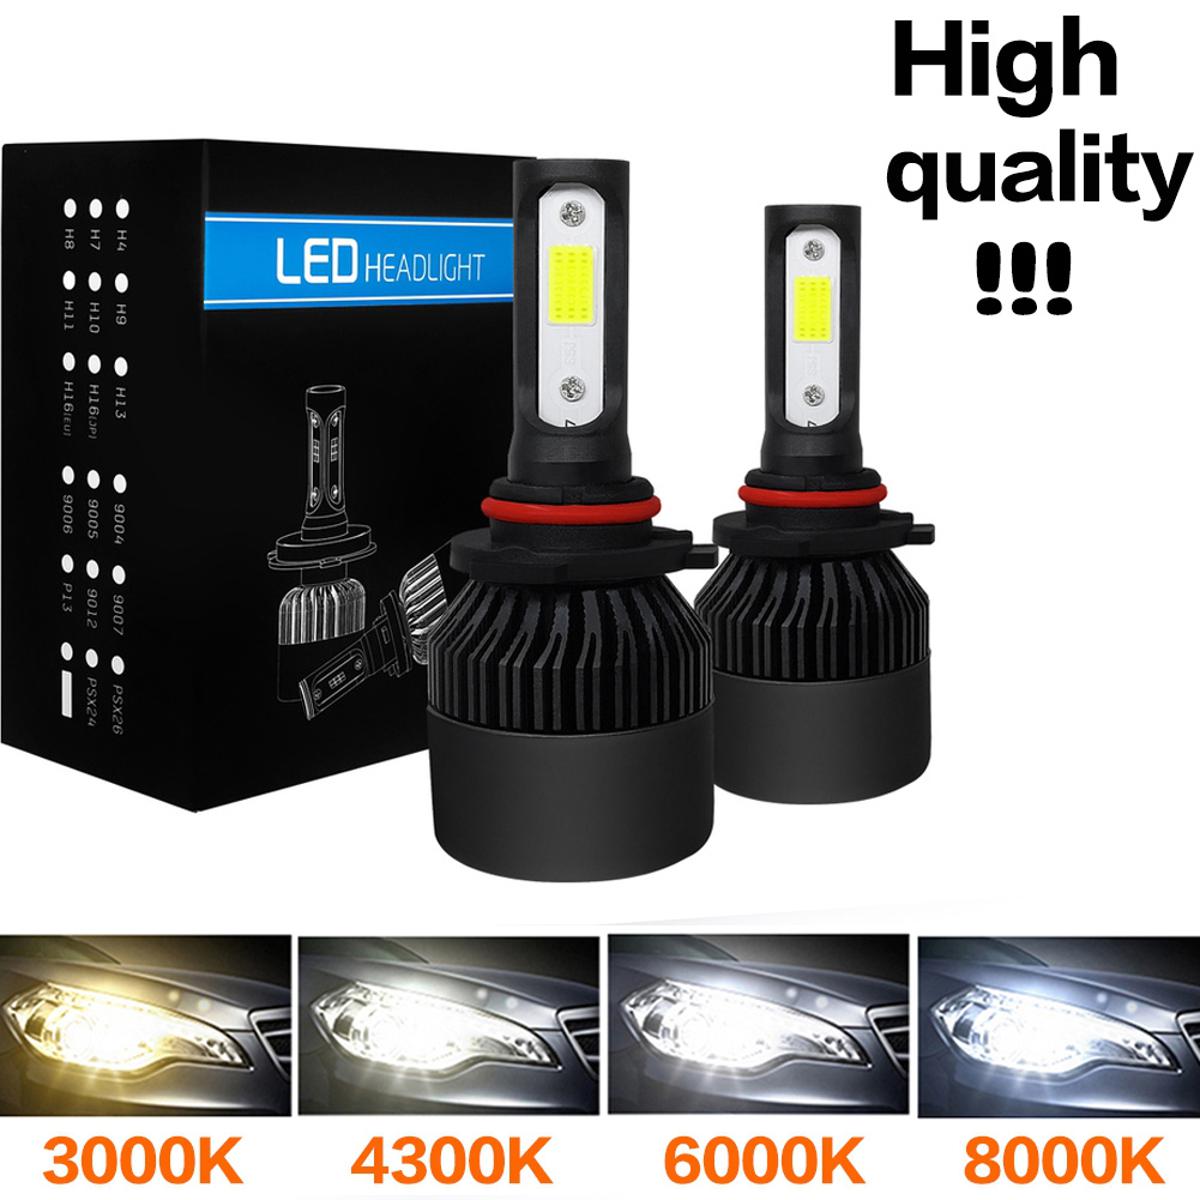 Quality upgrade】1 Pair HB4 9006 6000K LED Car Headlight 10000LM